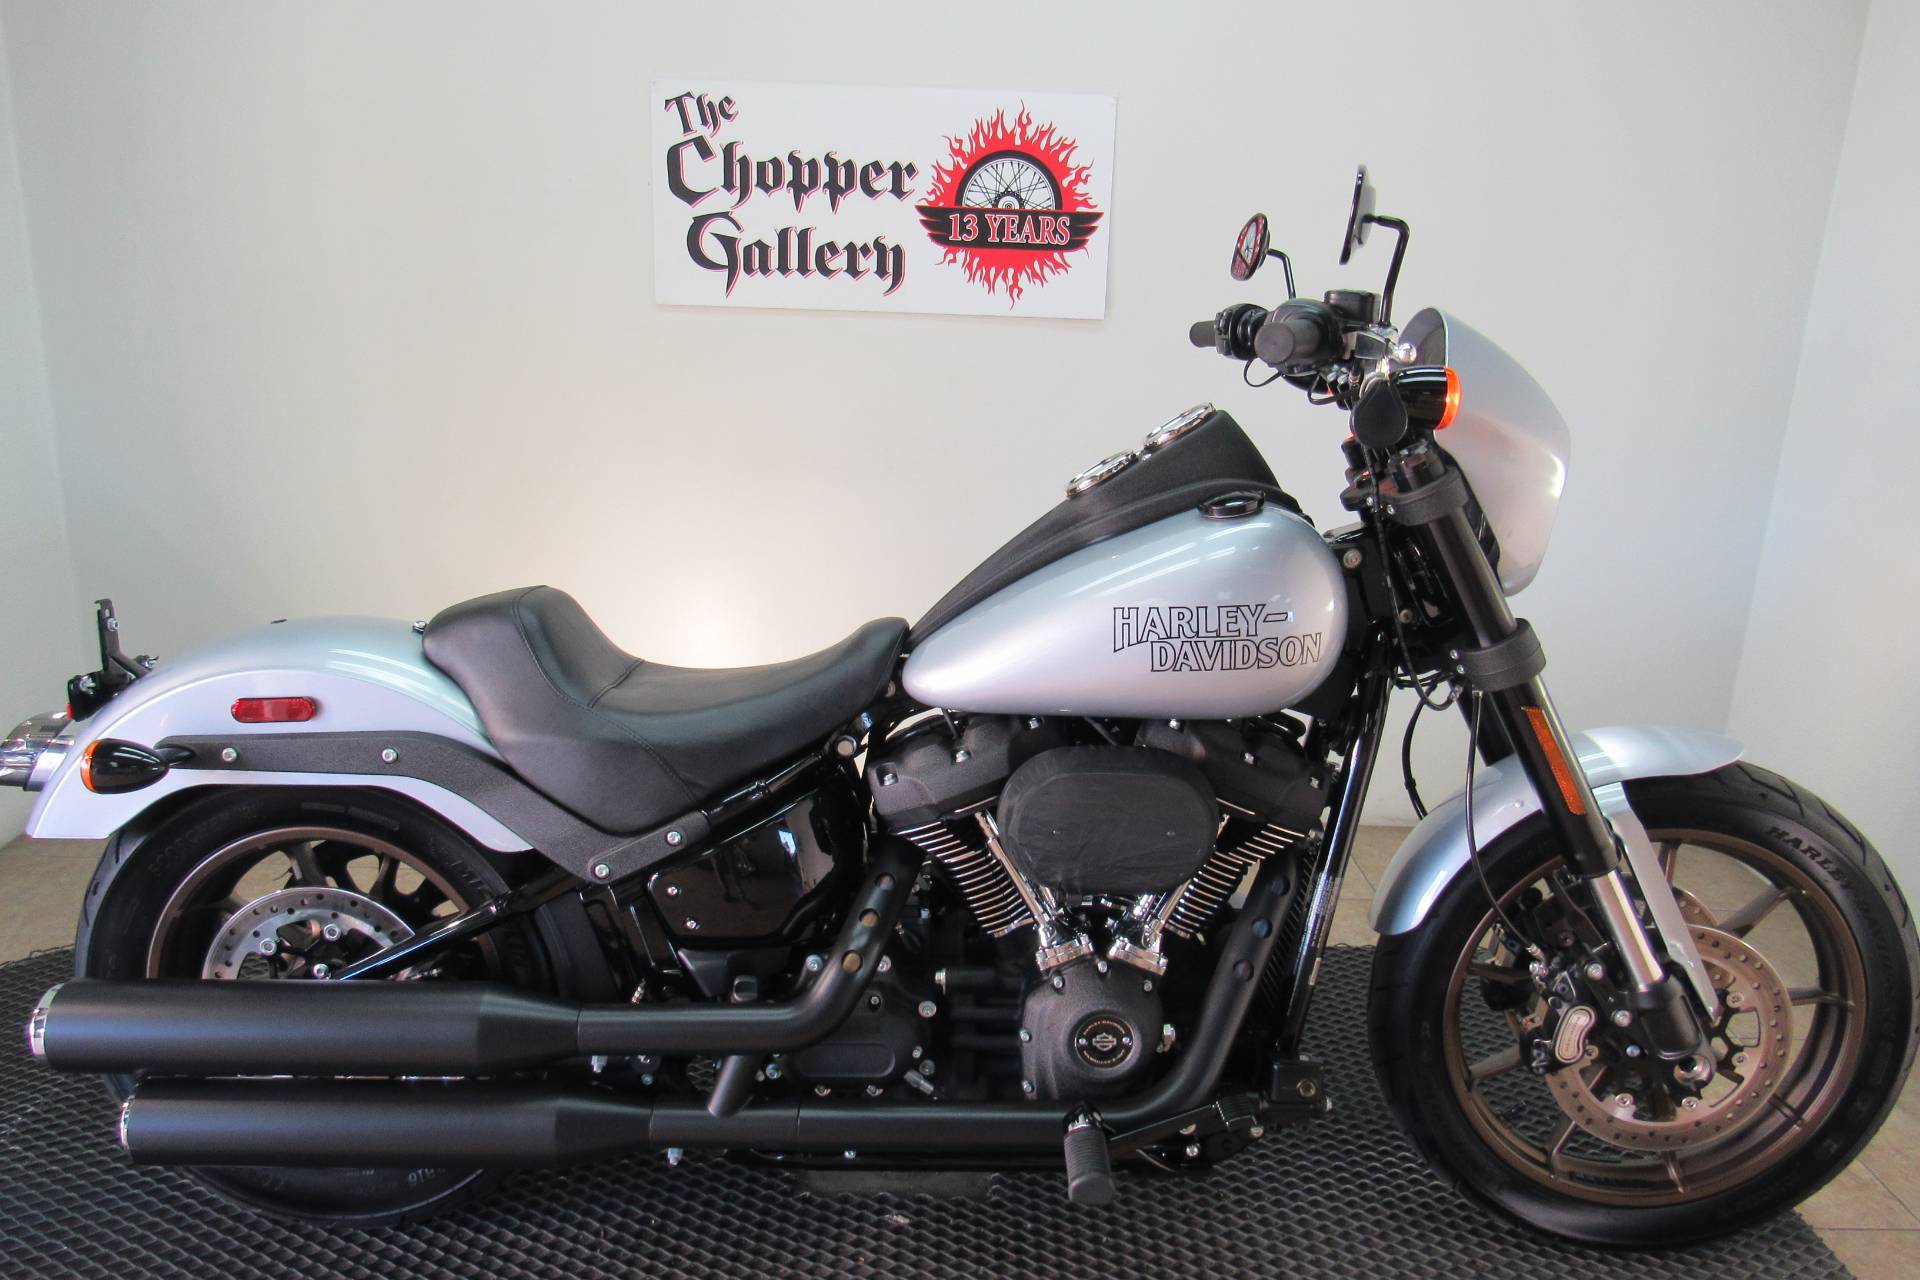 2020 Harley-Davidson Low Rider®S in Temecula, California - Photo 1